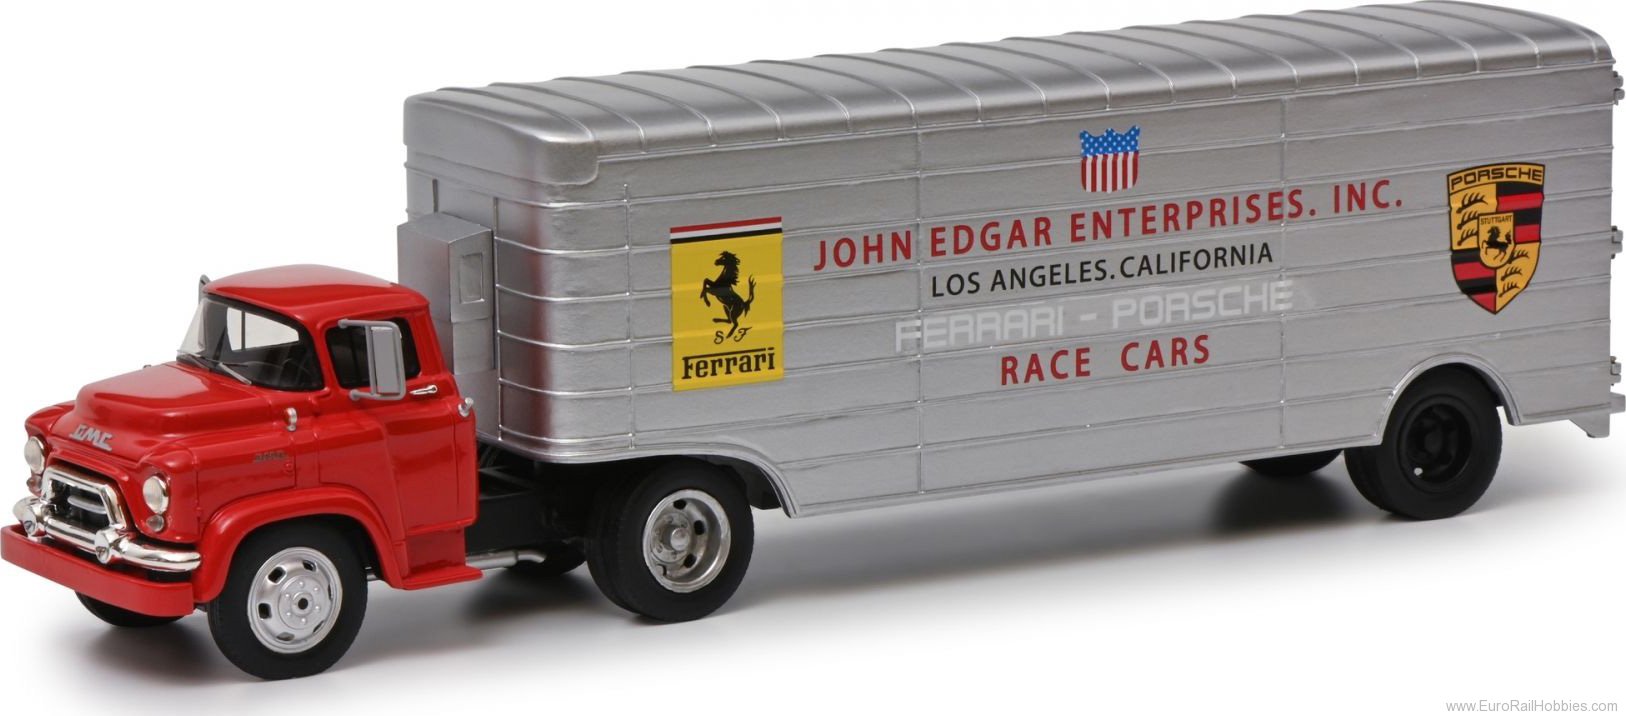 Schuco 450913400 Racing transp. John Edgar Ent (1:43 Edition)